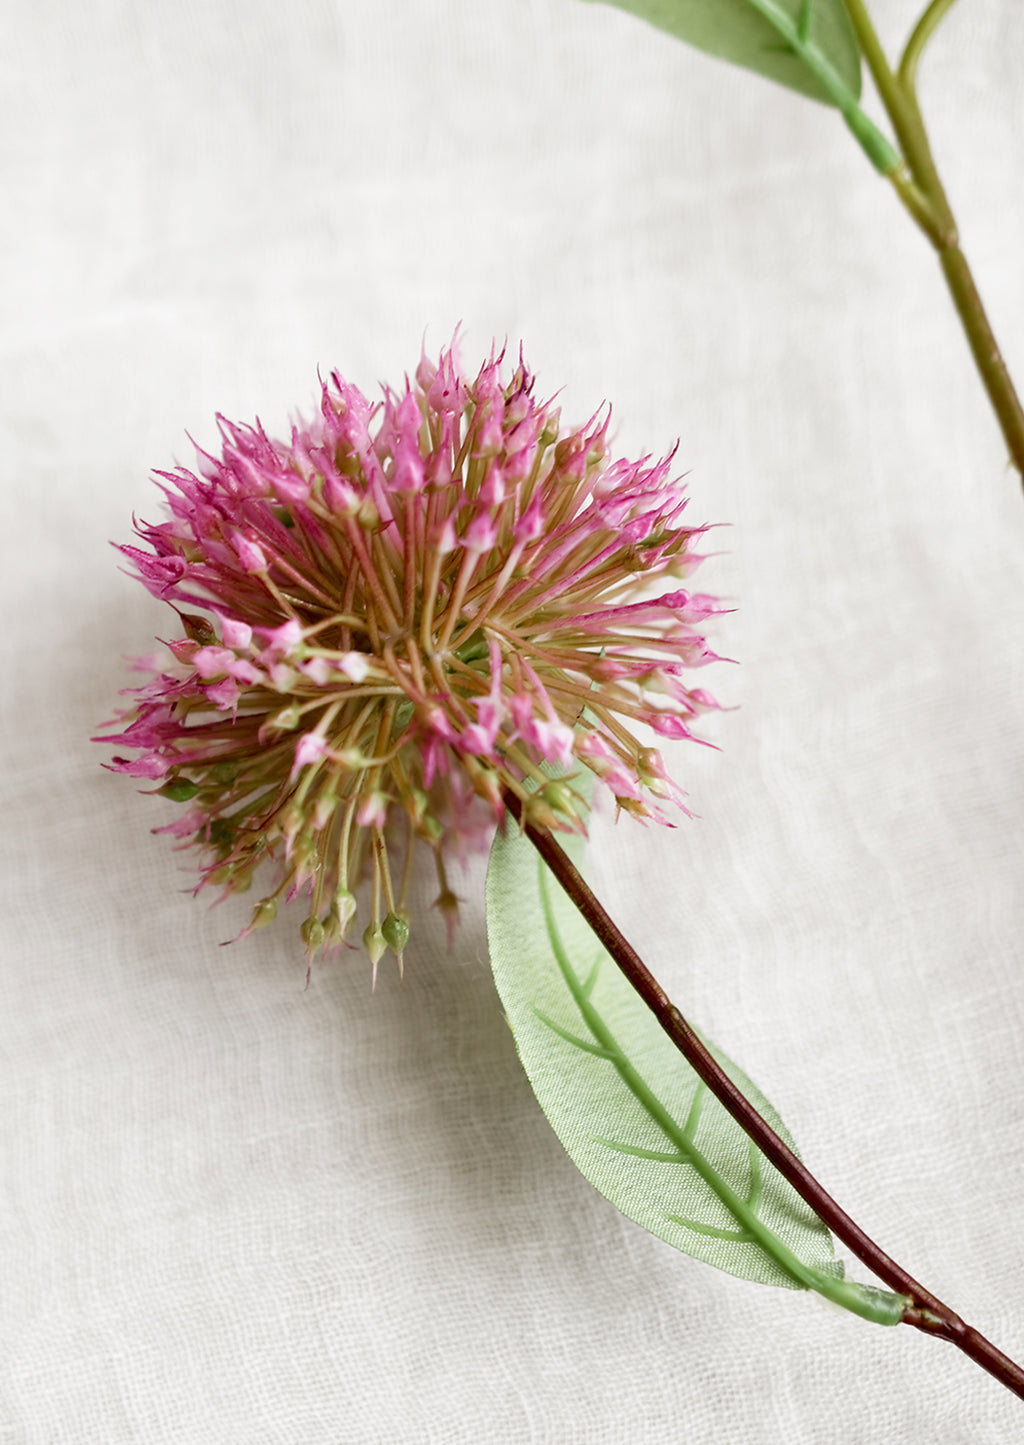 2: A faux floral spray of allium (onion) flowers.